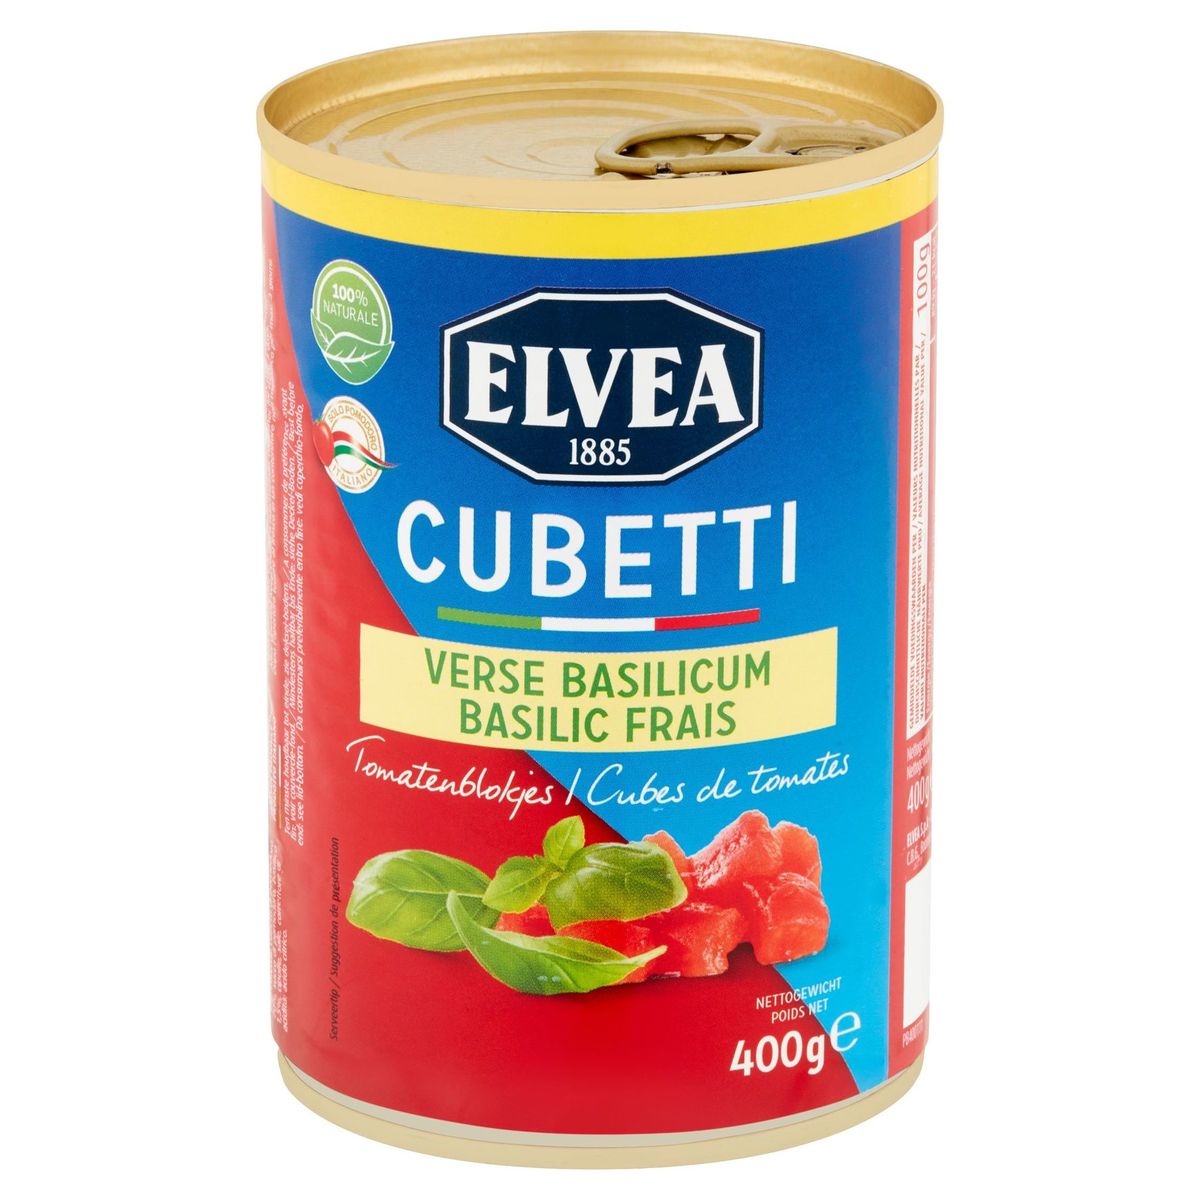 Elvea Cubetti Verse Basilicum Tomatenblokjes 400 g